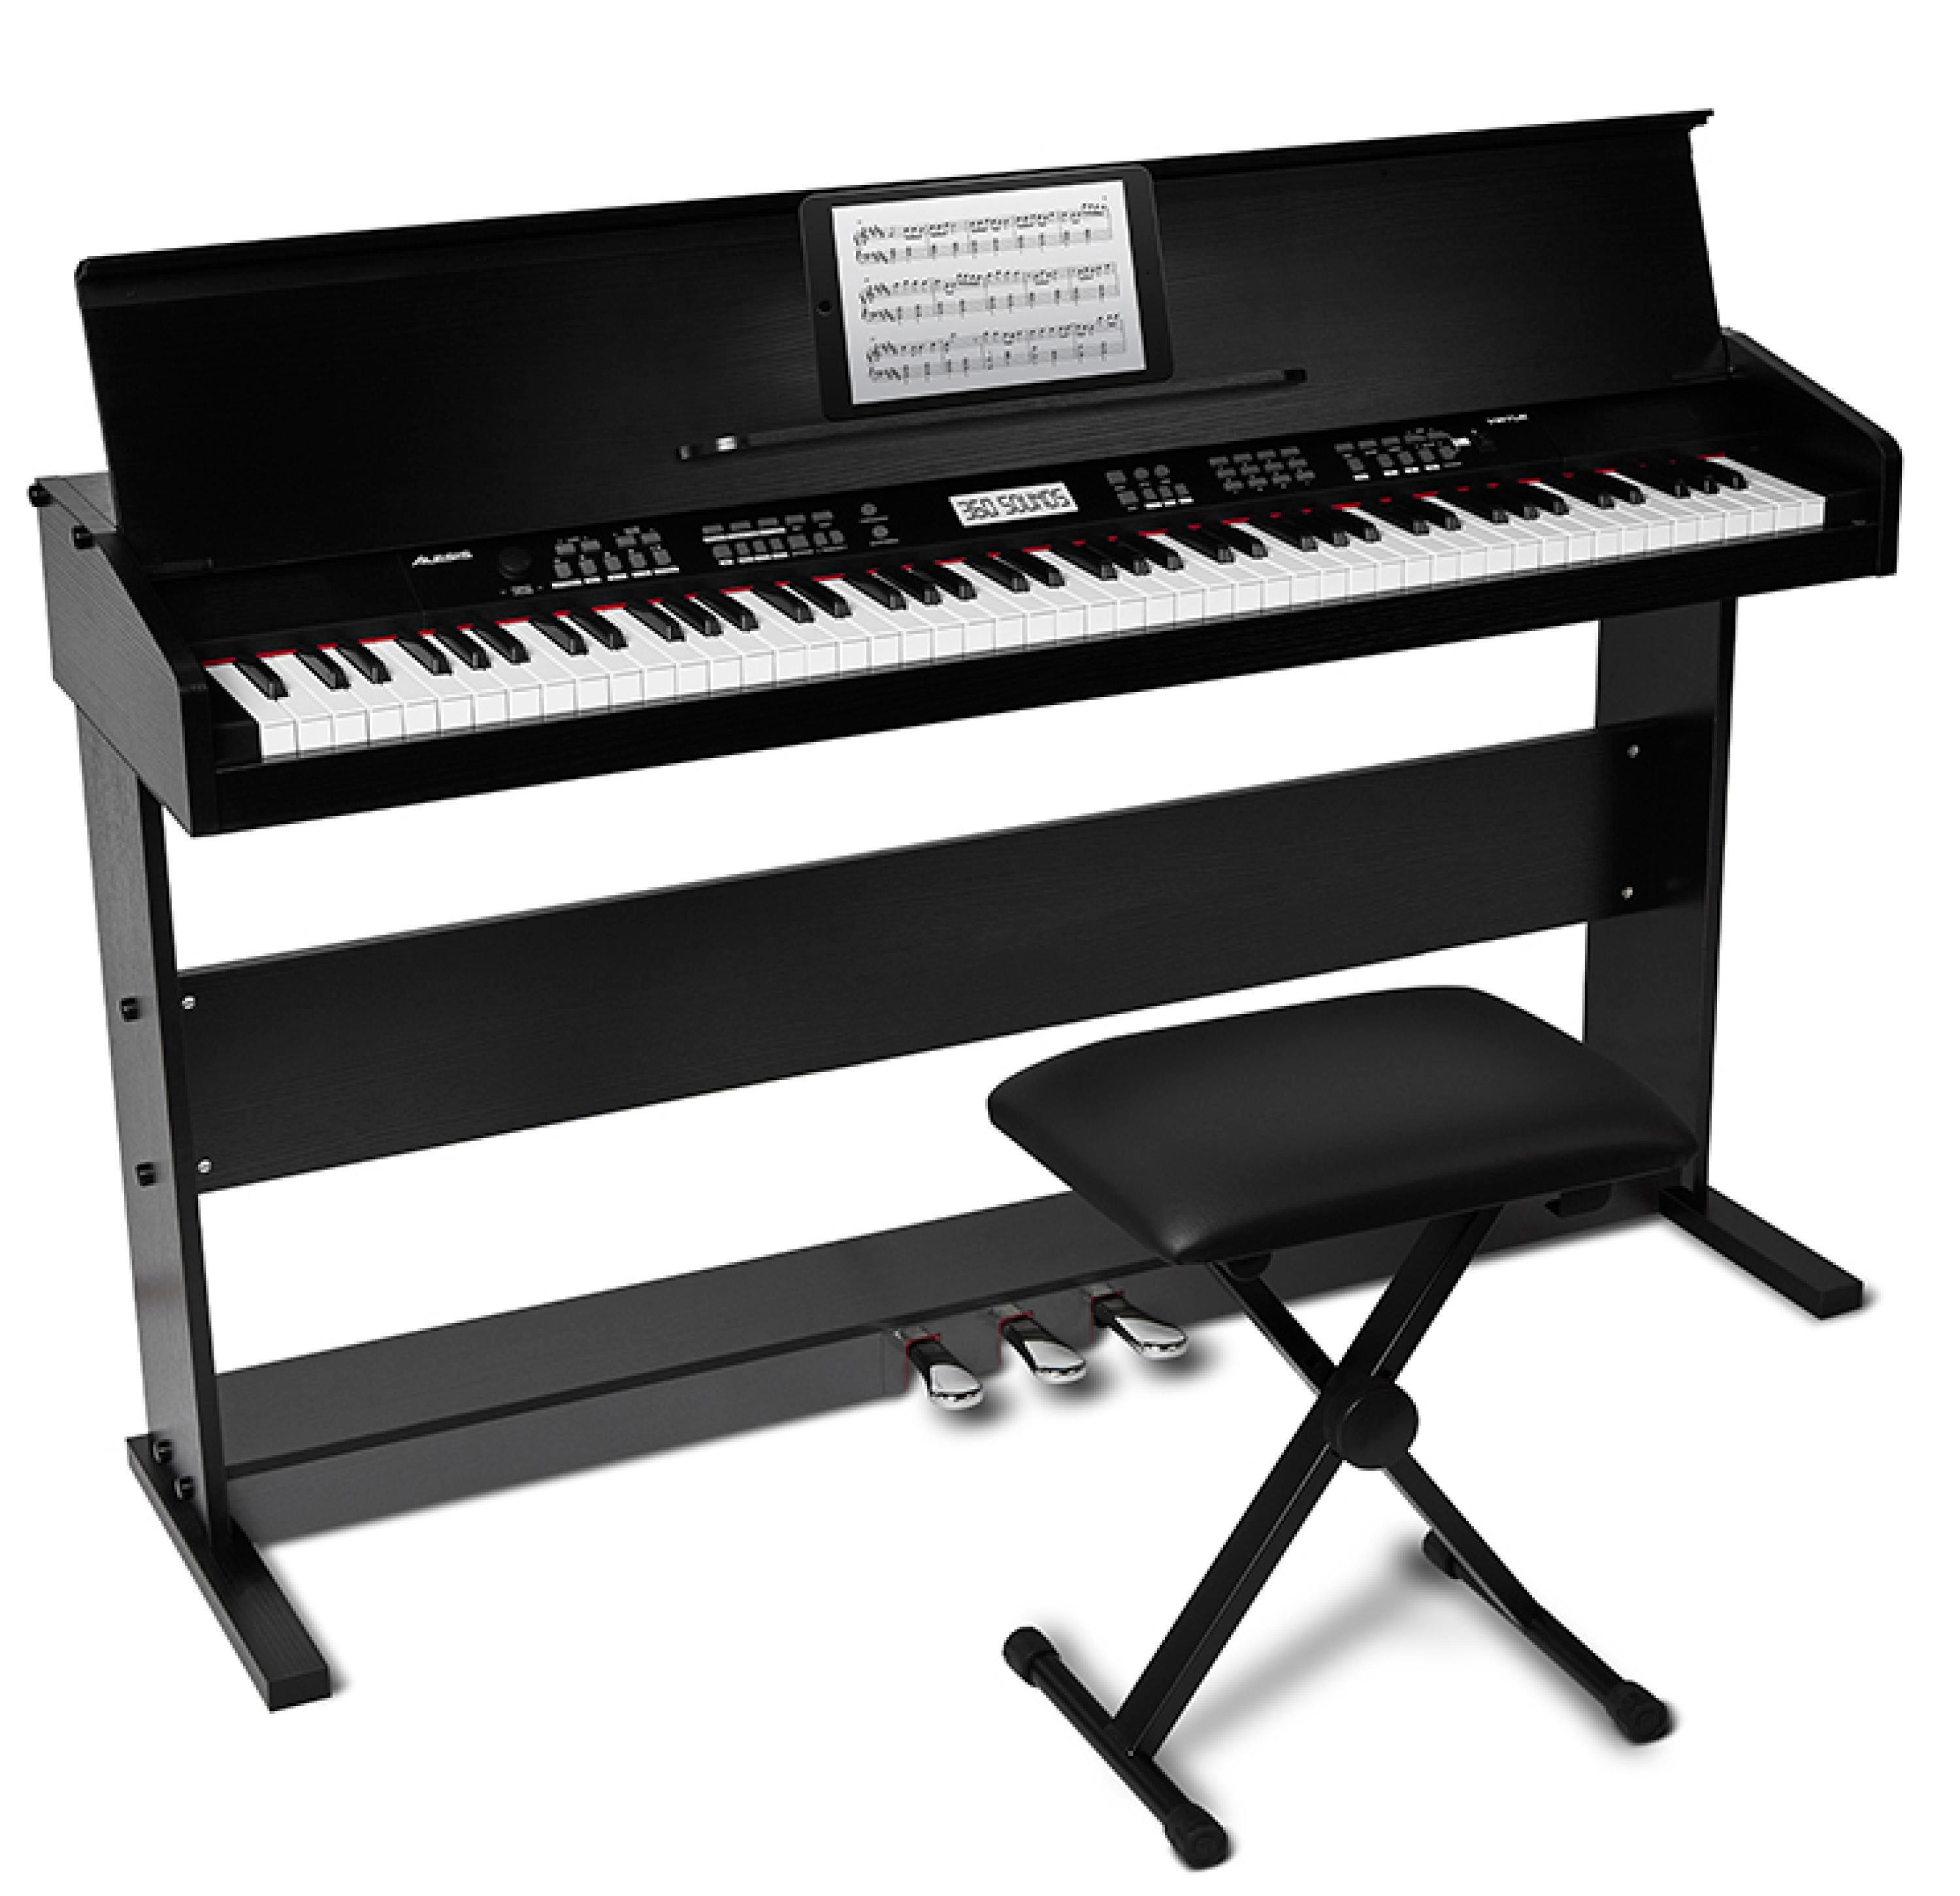  Alesis Recital Pro 88-key Hammer-action Digital Piano  Essentials Bundle : Musical Instruments